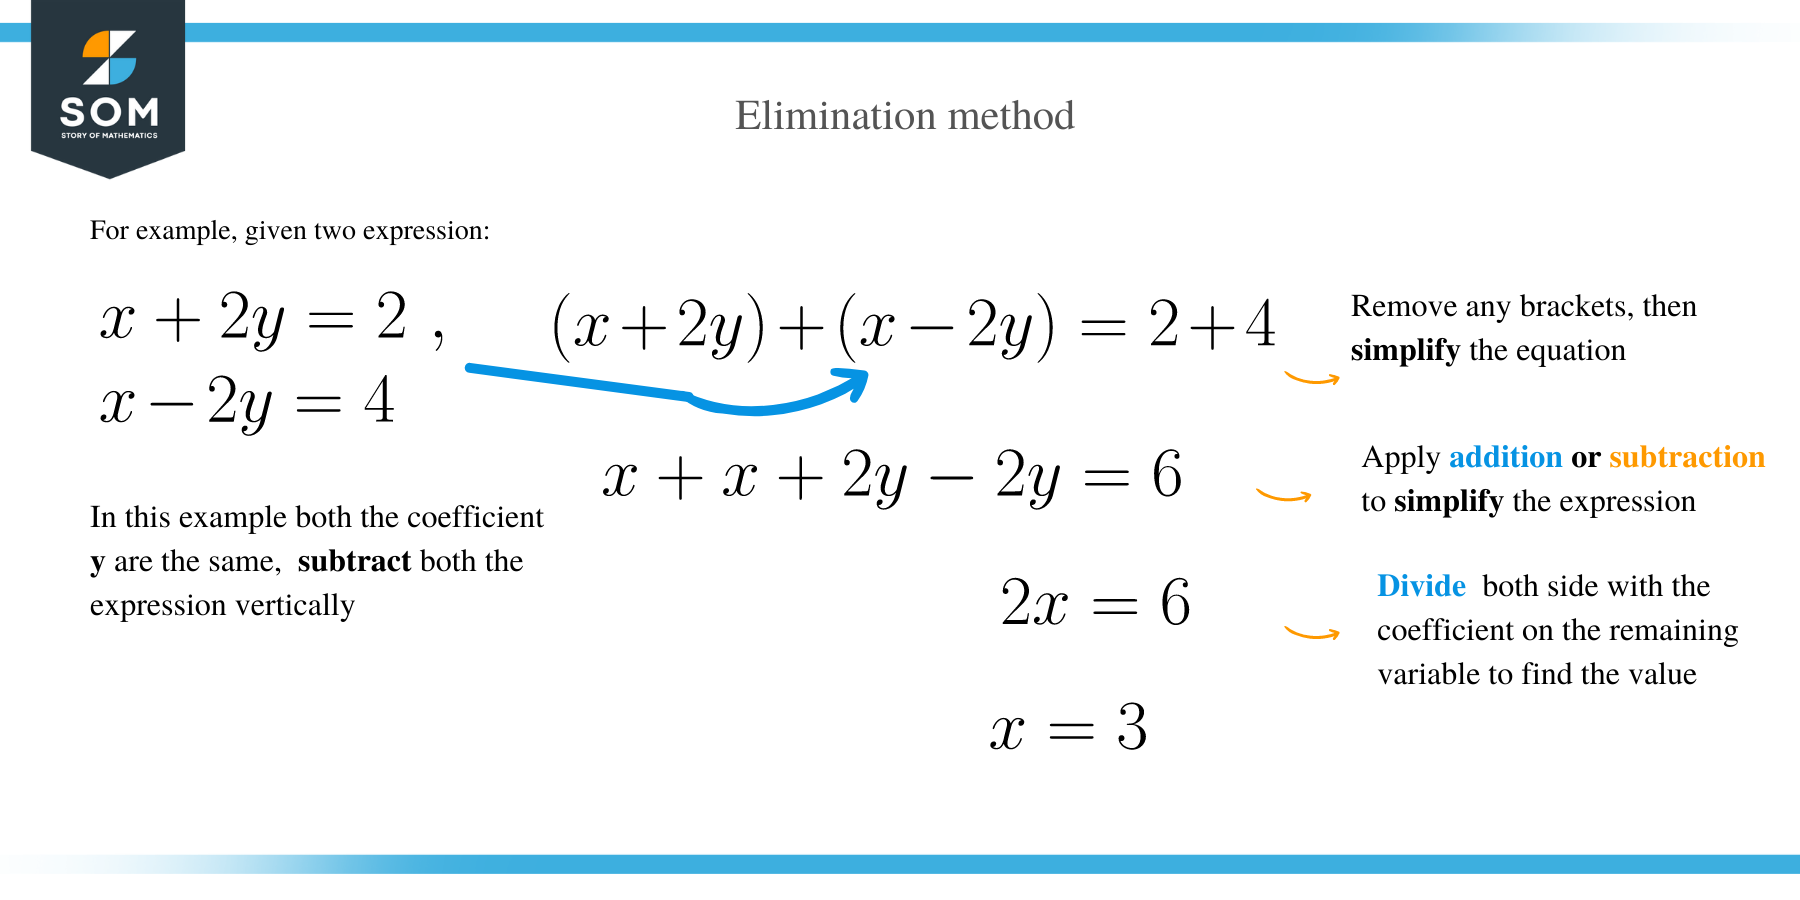 Solving Elimination method